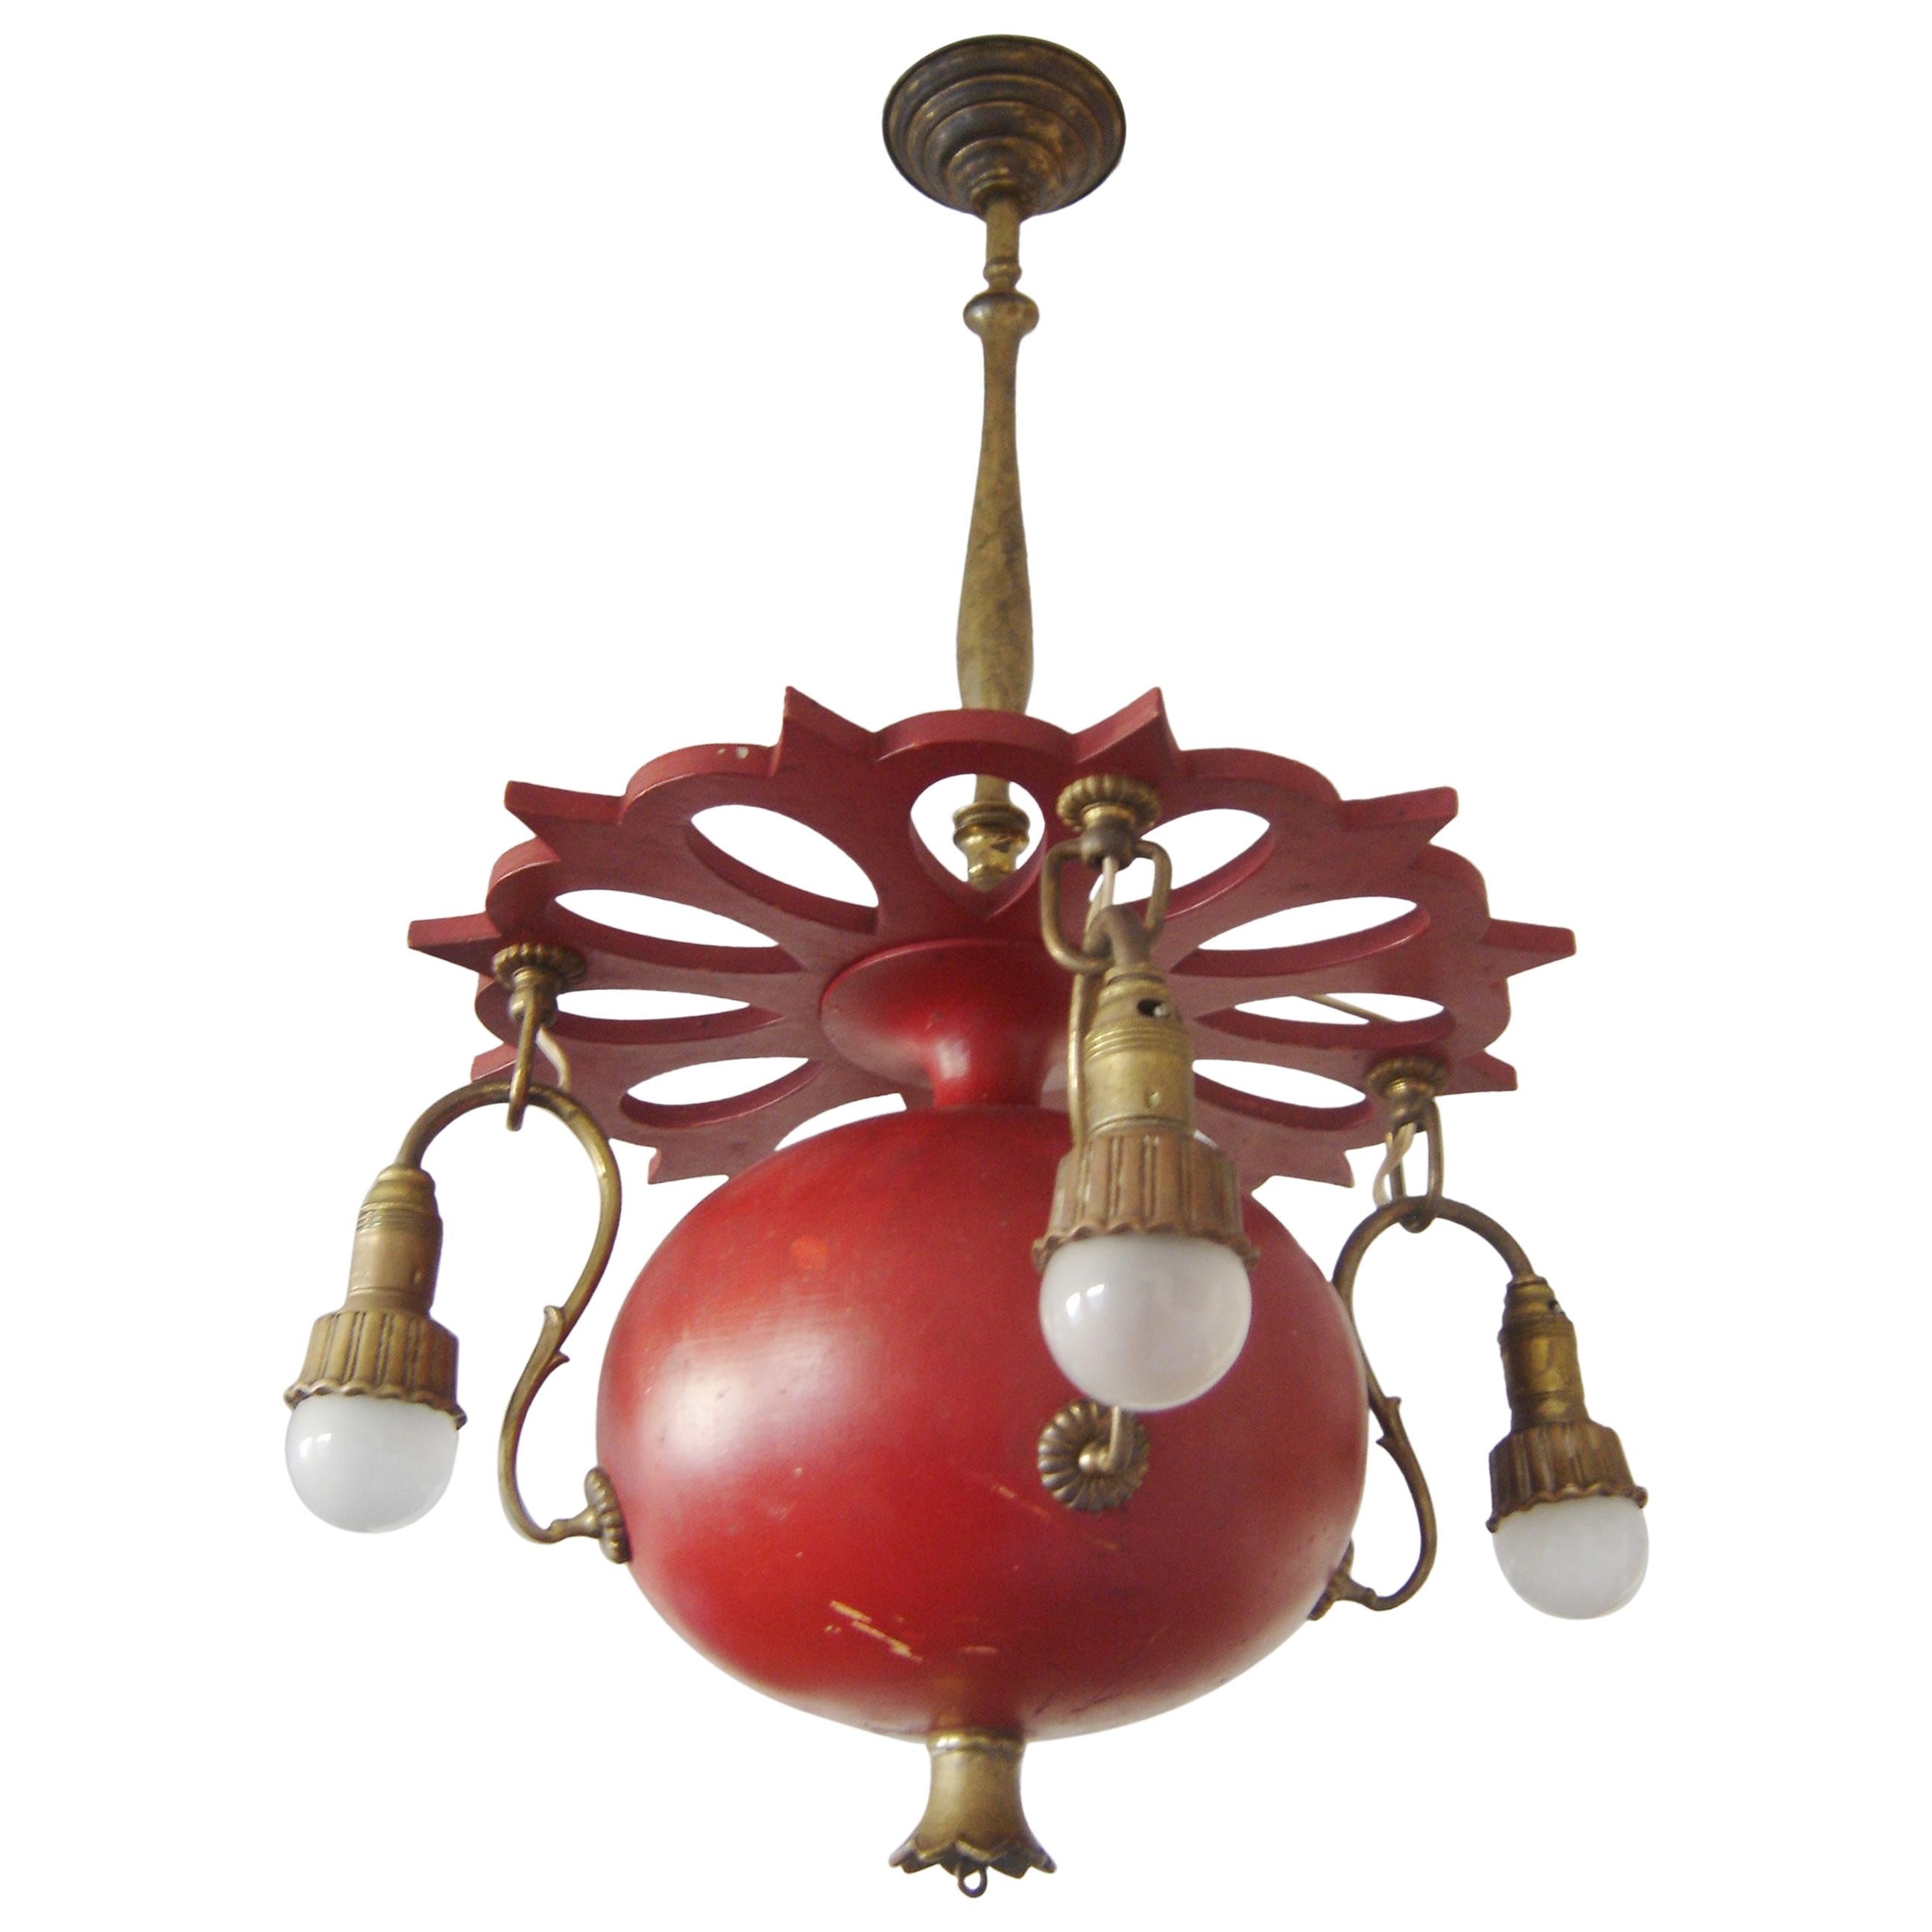 Exceptional Art Nouveau Chandelier or Pendant Lamp 'Granate Apple', 1900 Germany